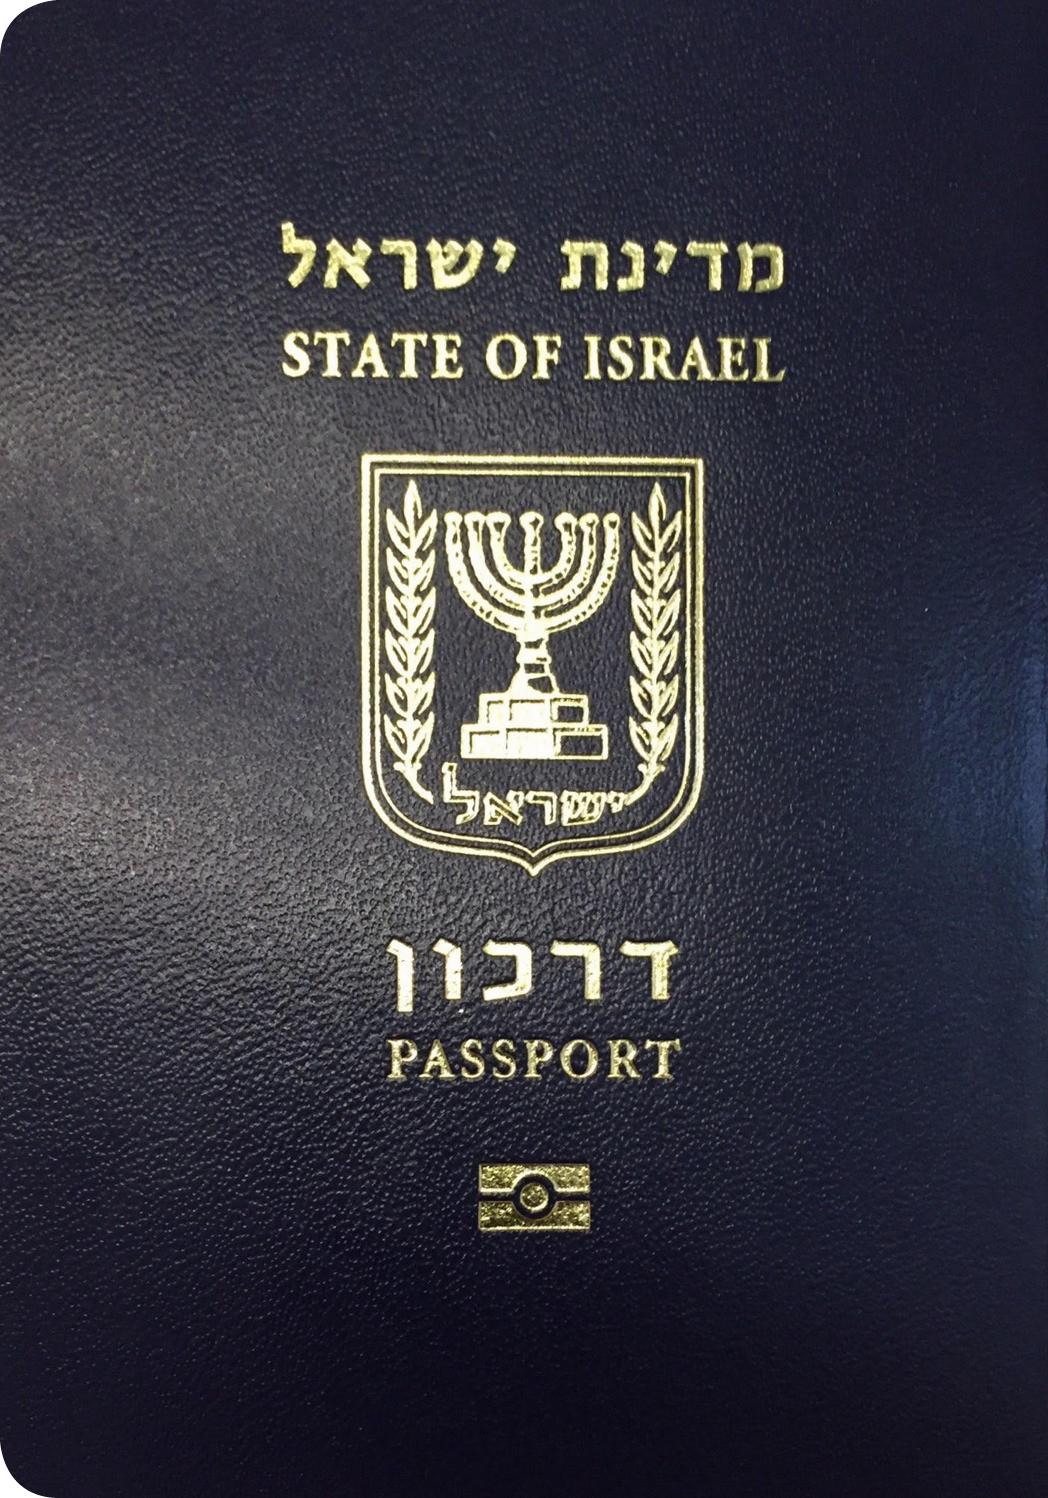 A regular or ordinary Israeli passport - Front side